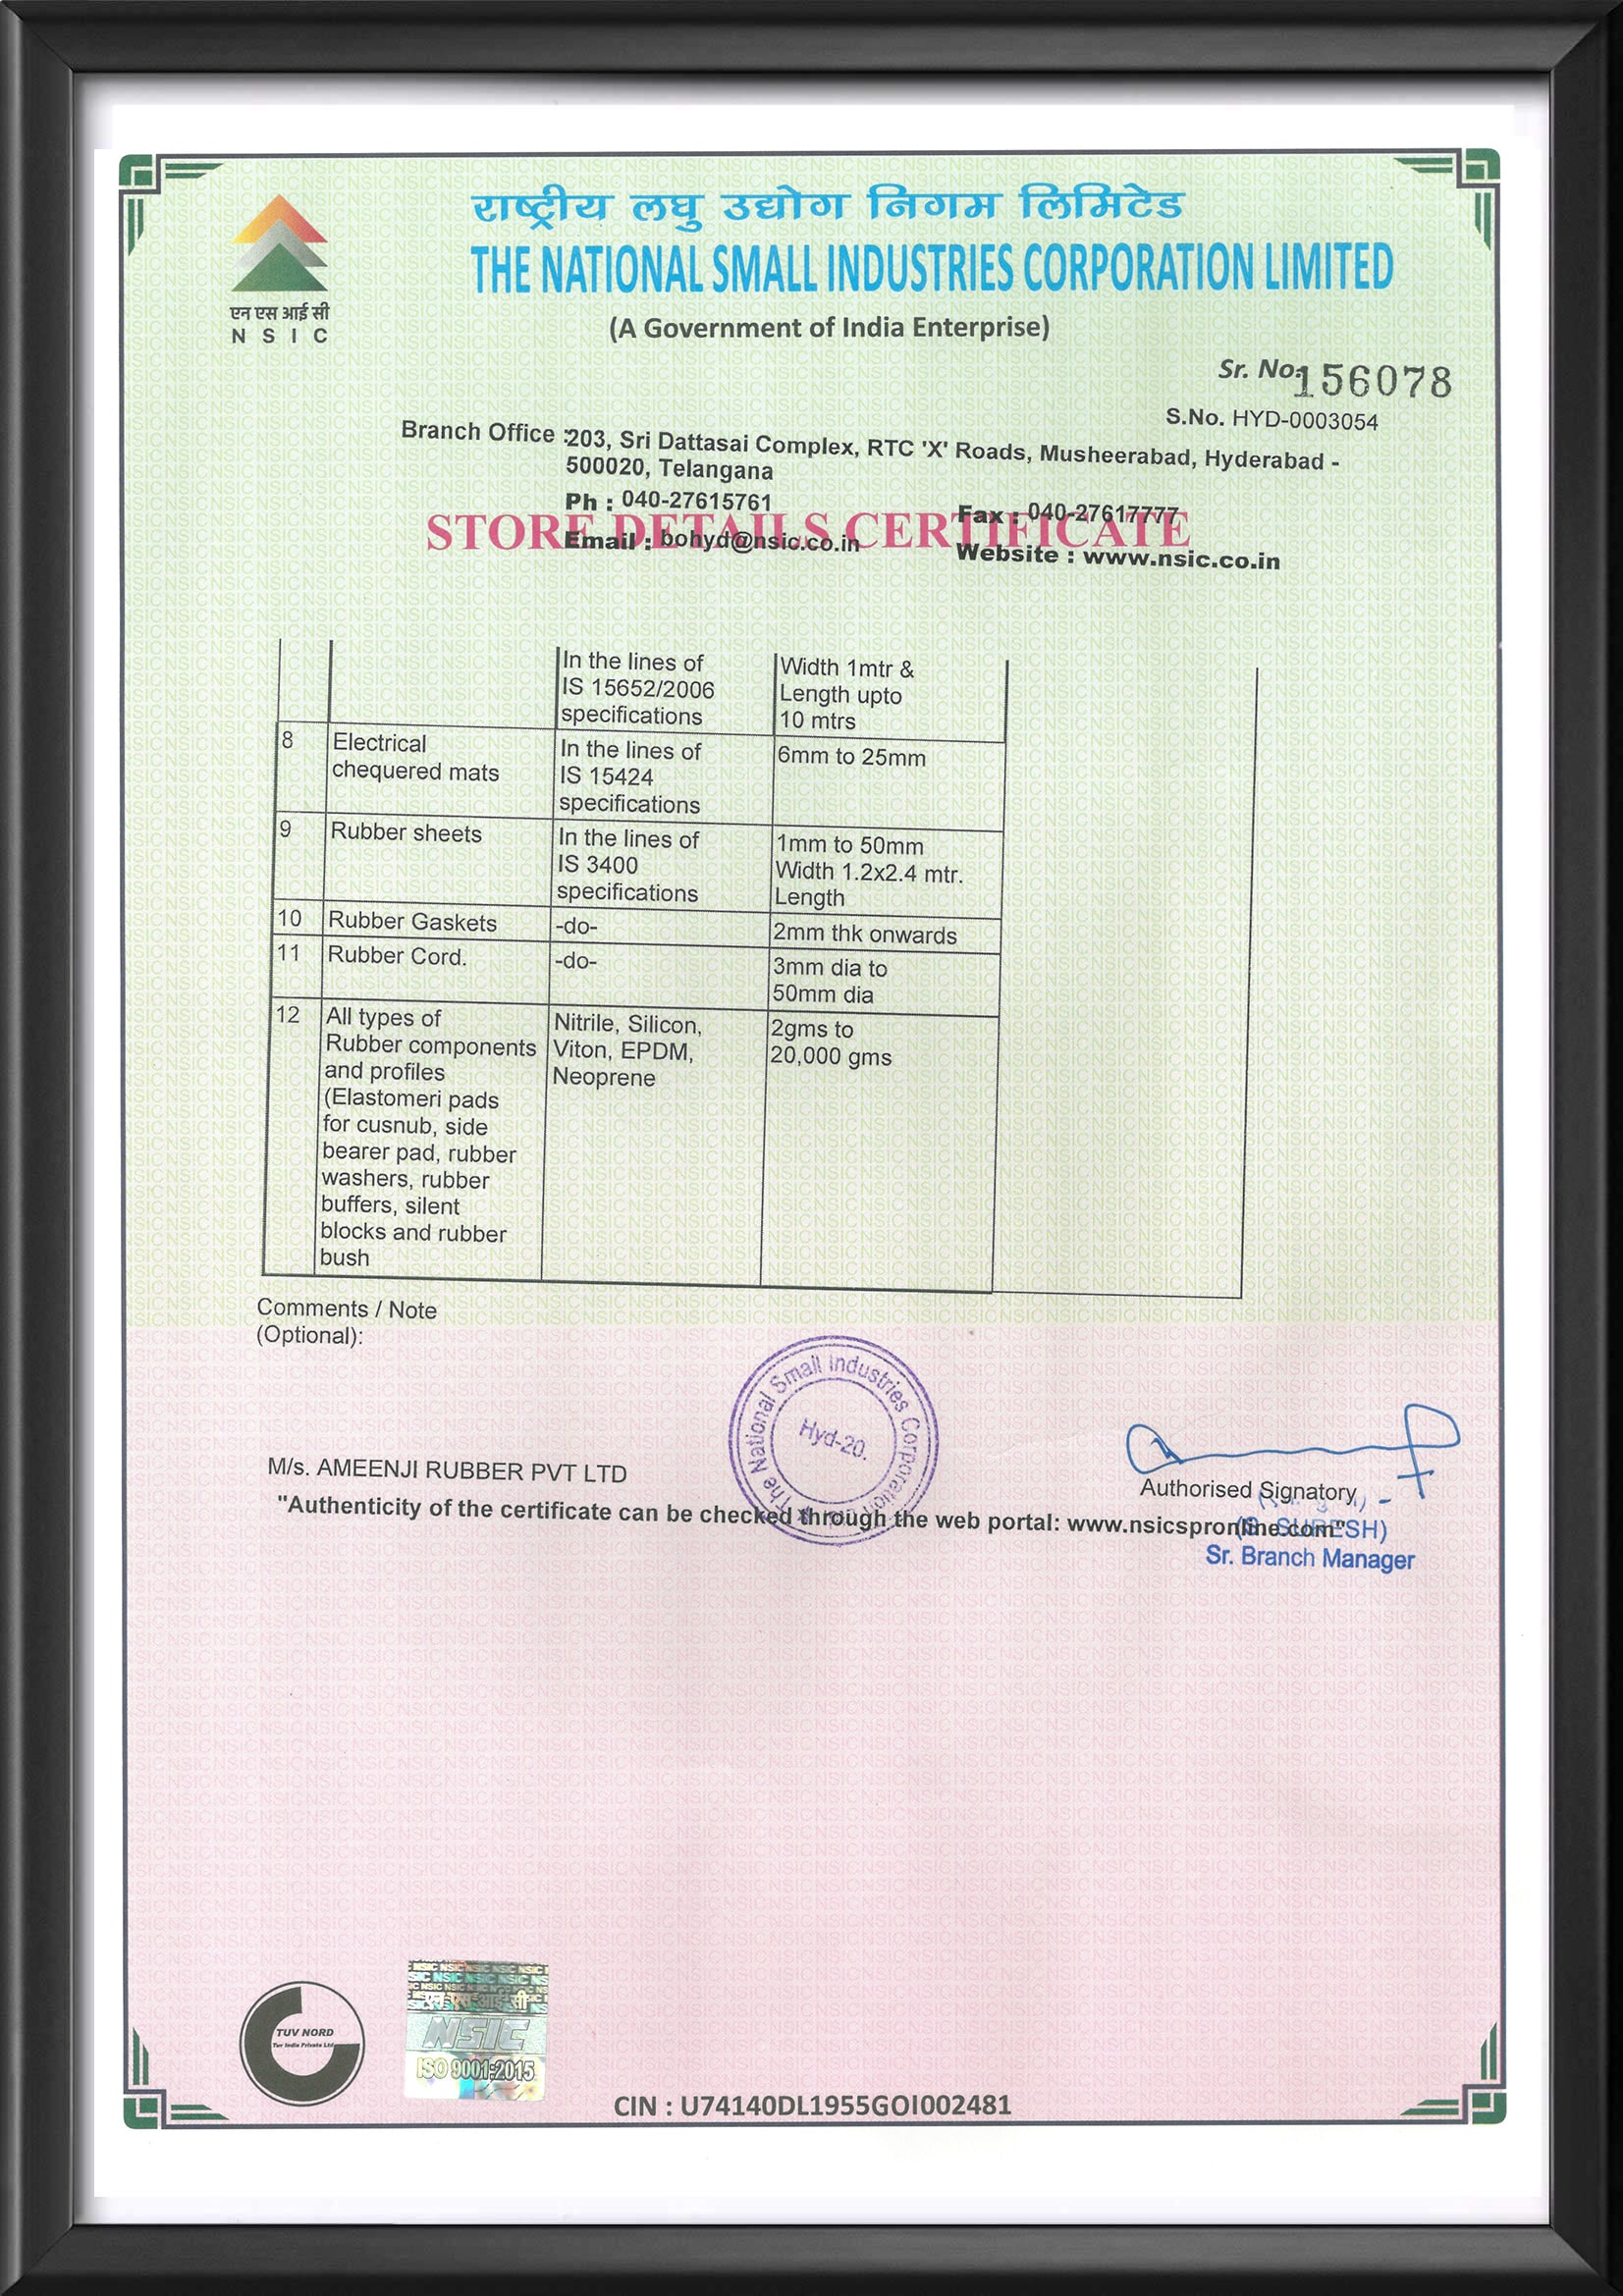 Ameenji Certification